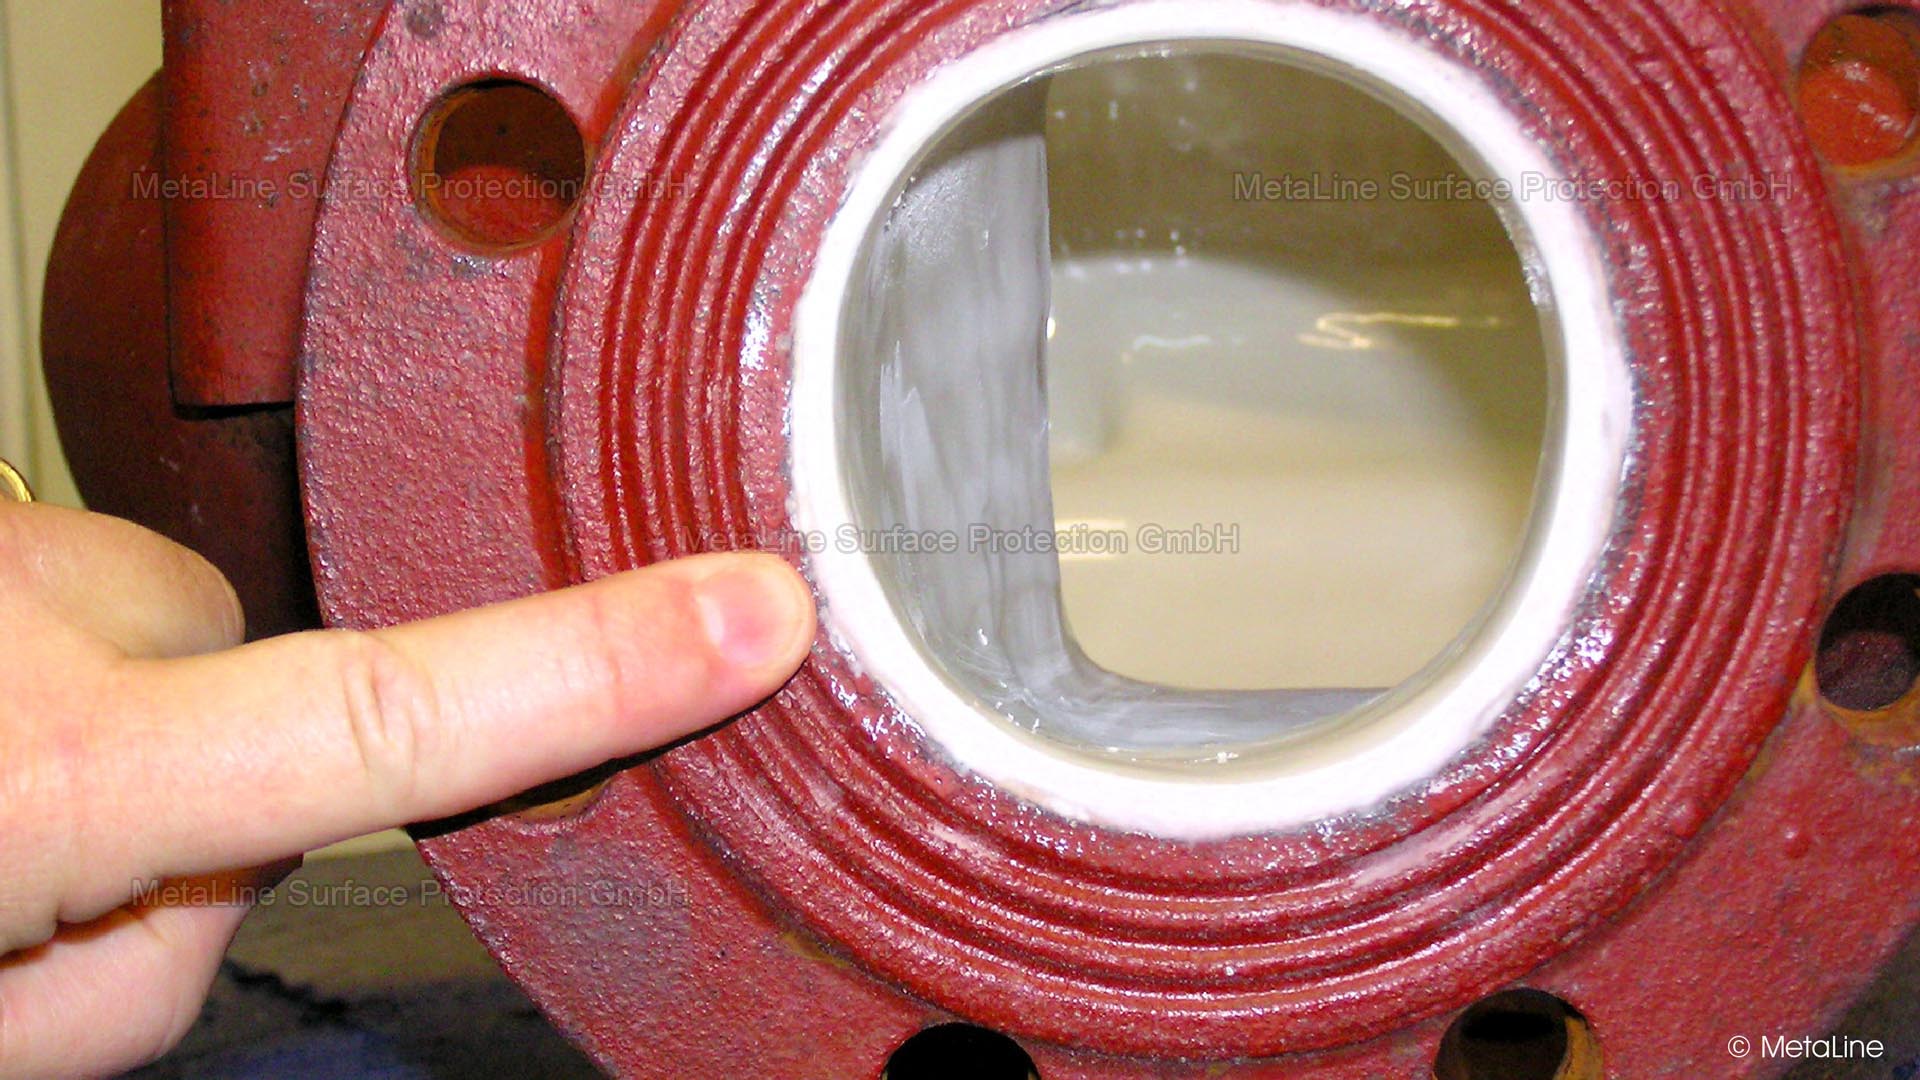 1641-0109_Schieber_Ventil_Drosselklappe_Reparatur_Beschichtung_butterfly_valve_repair_coating_corrosion_protection